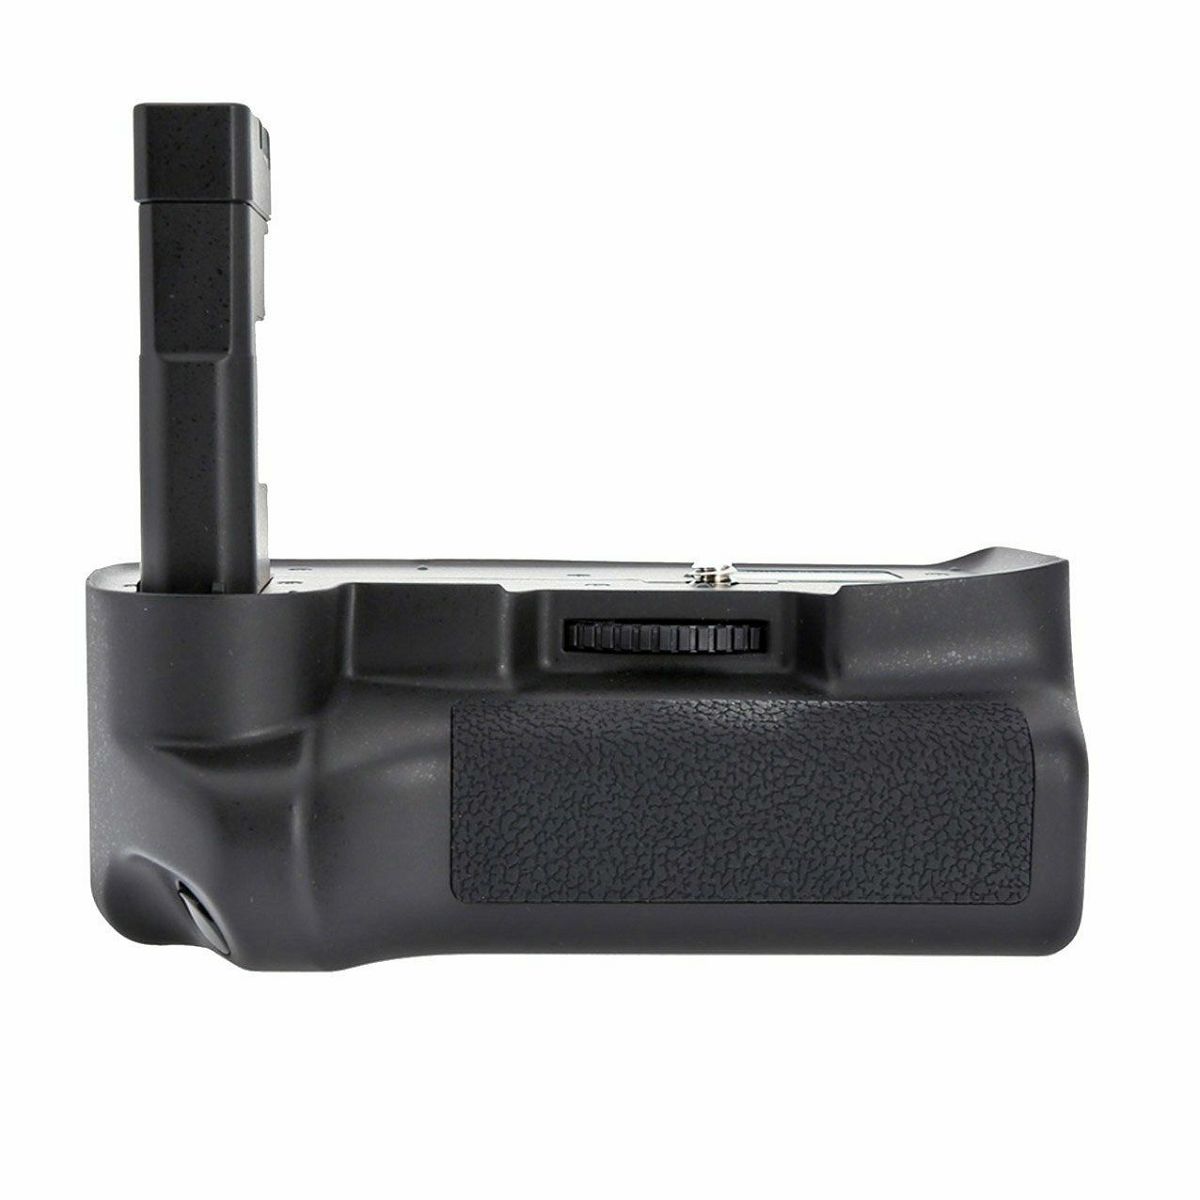 Voking Držač baterija za Nikon D3300, D5300 Battery grip Batteriegriff (VK-BG-ND3300)